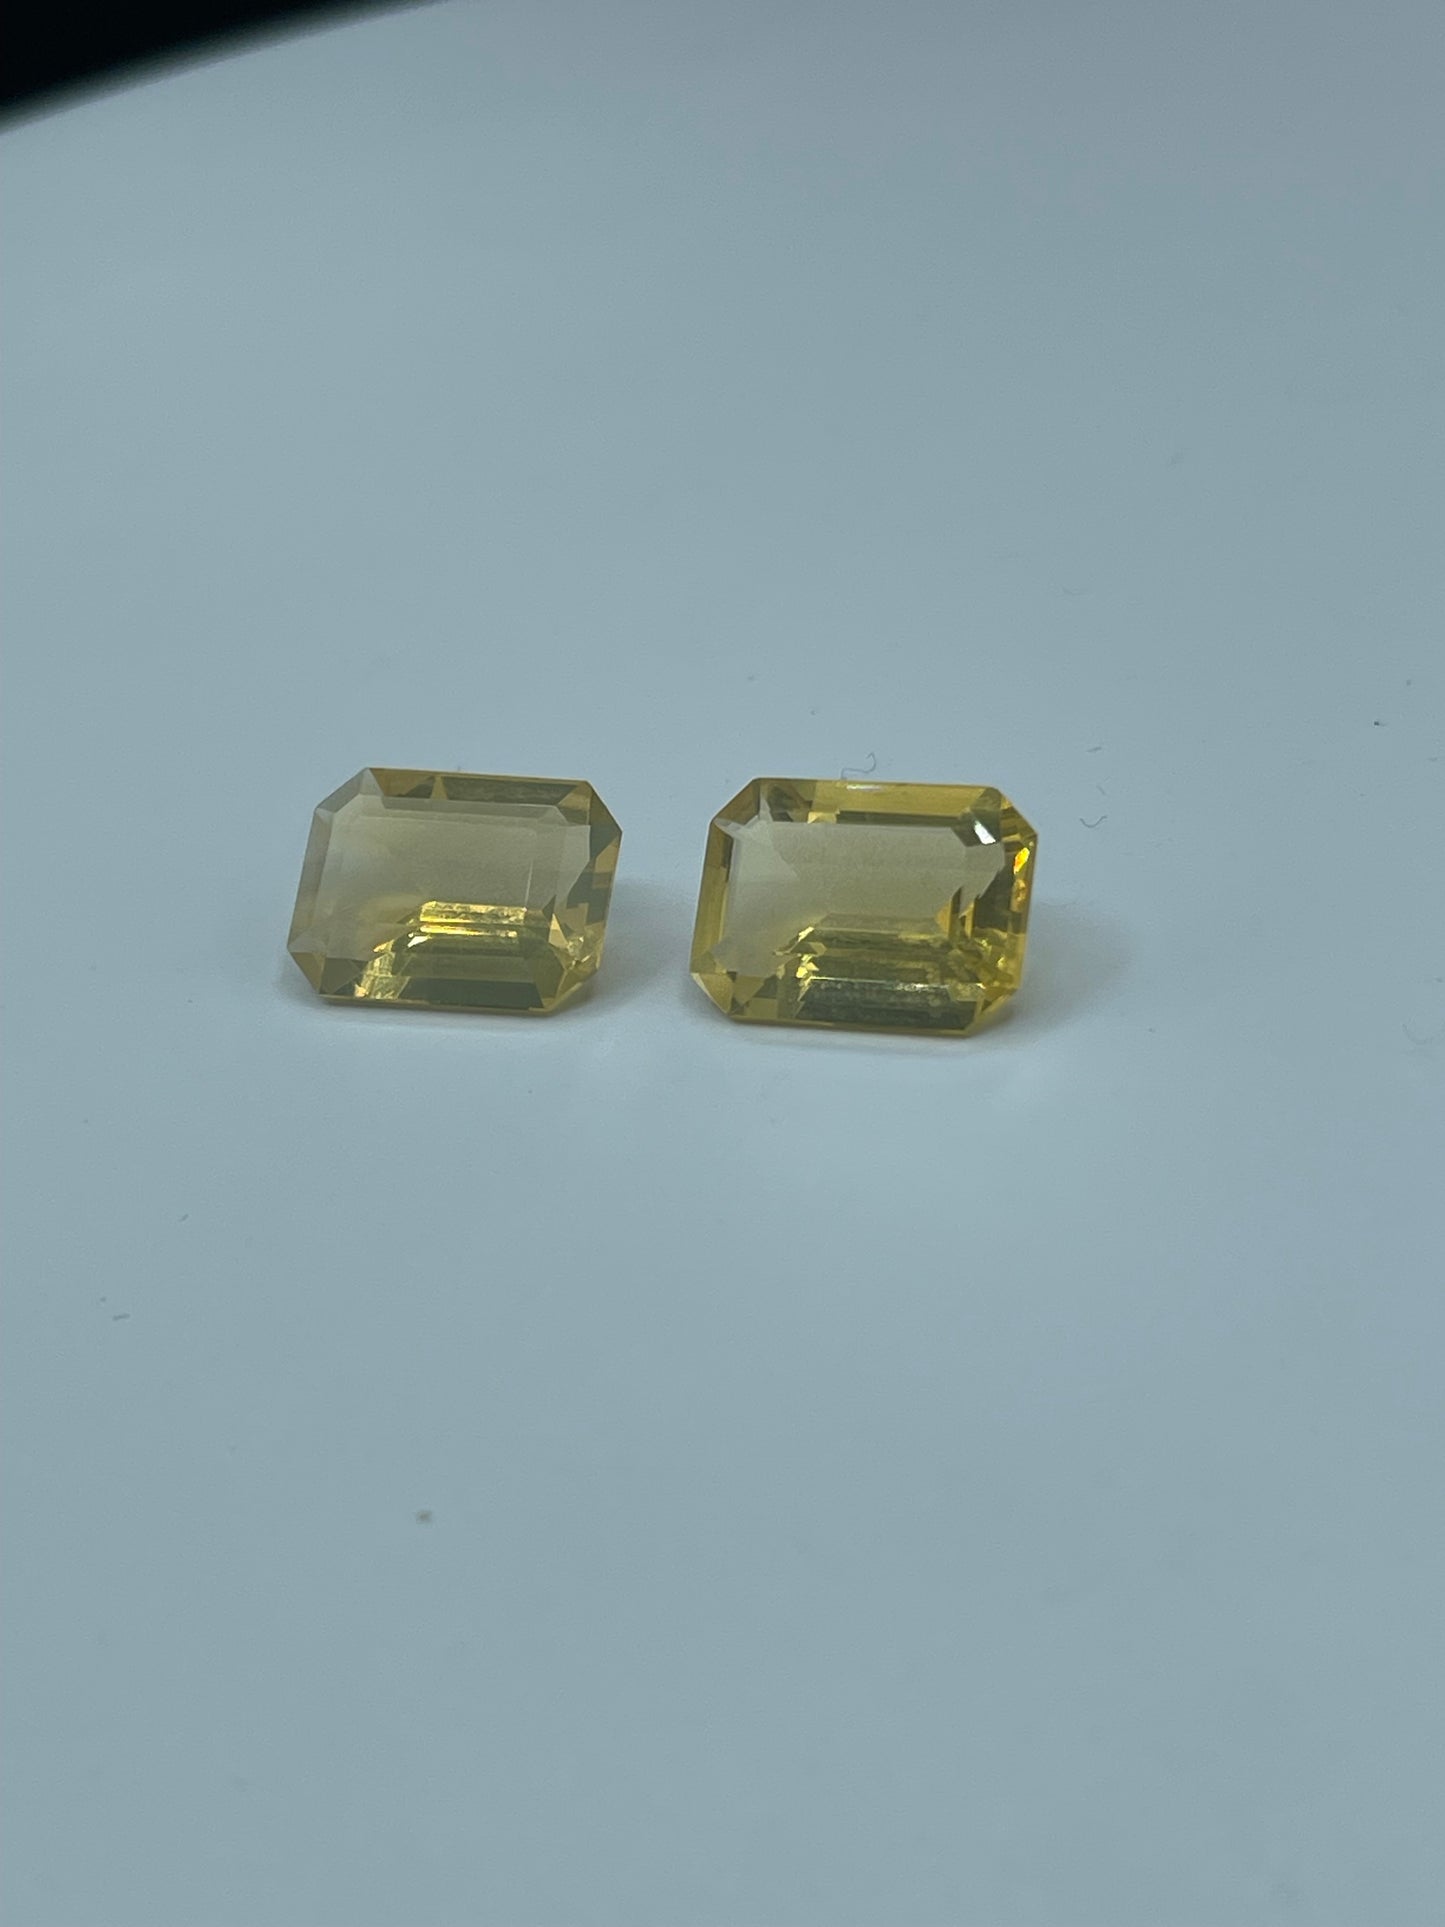 8.76 Carat Natural Mexican Opal Emerald Cut Matching Loose Gemstones (13.8 x 9.7 x 6.2 MM)